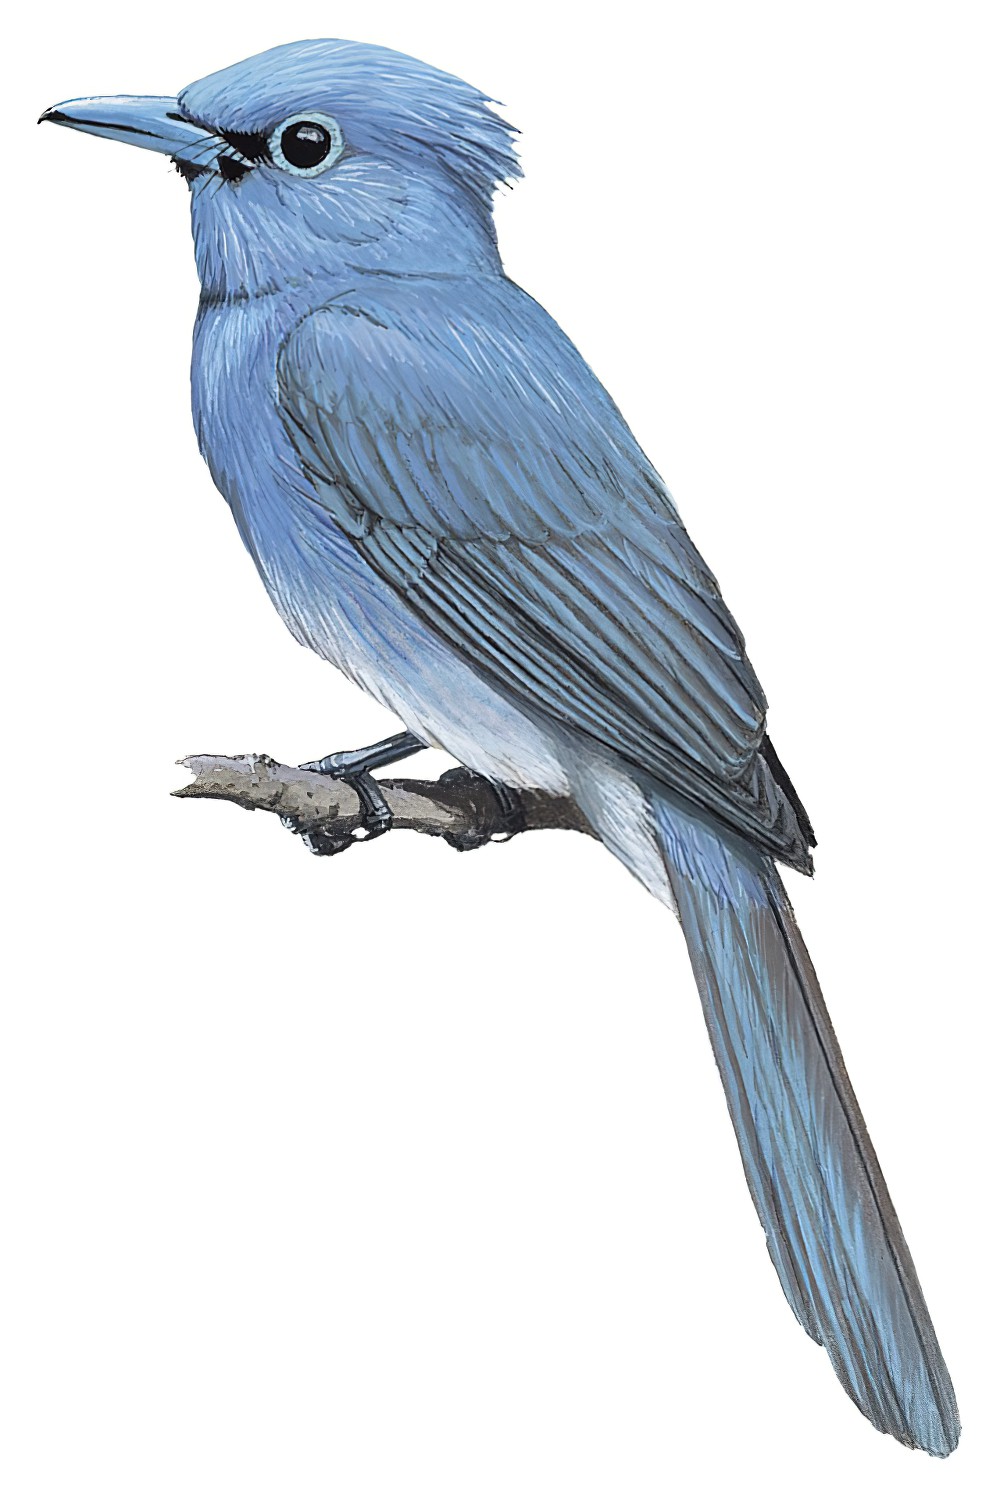 Blue Paradise-Flycatcher / Terpsiphone cyanescens